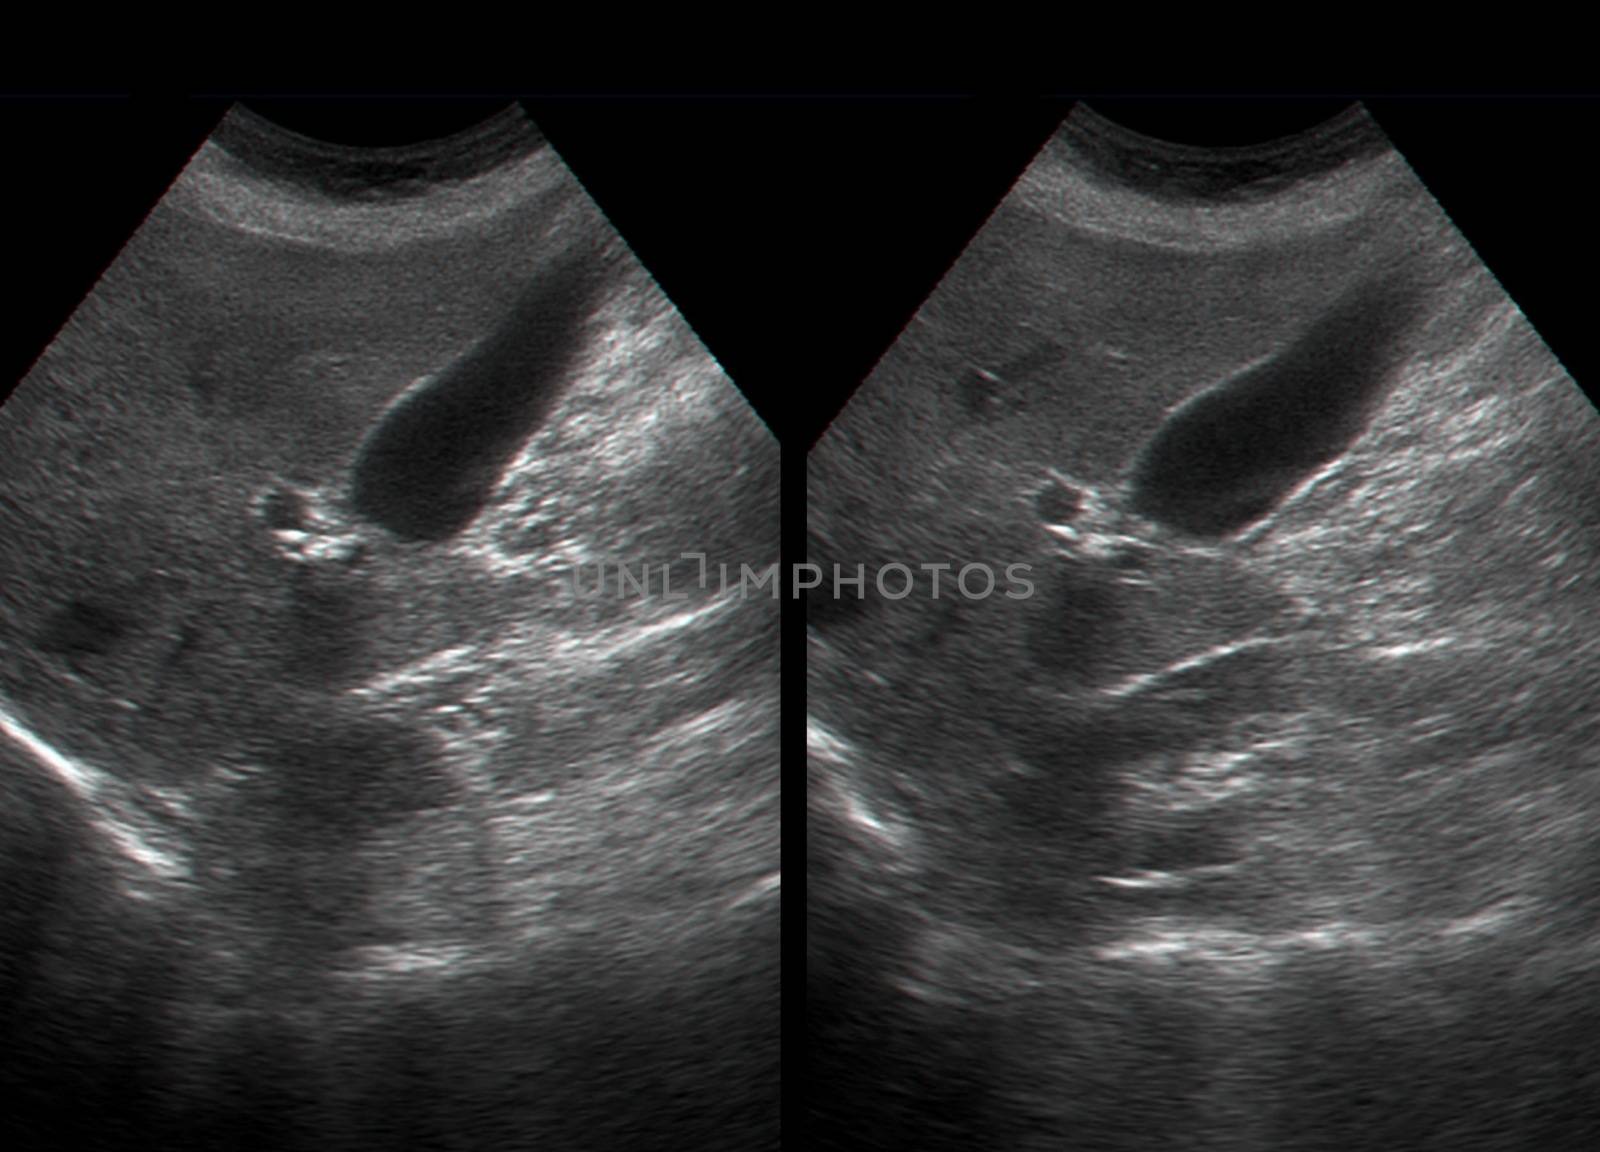 Ultrasound examination of  human internal organs